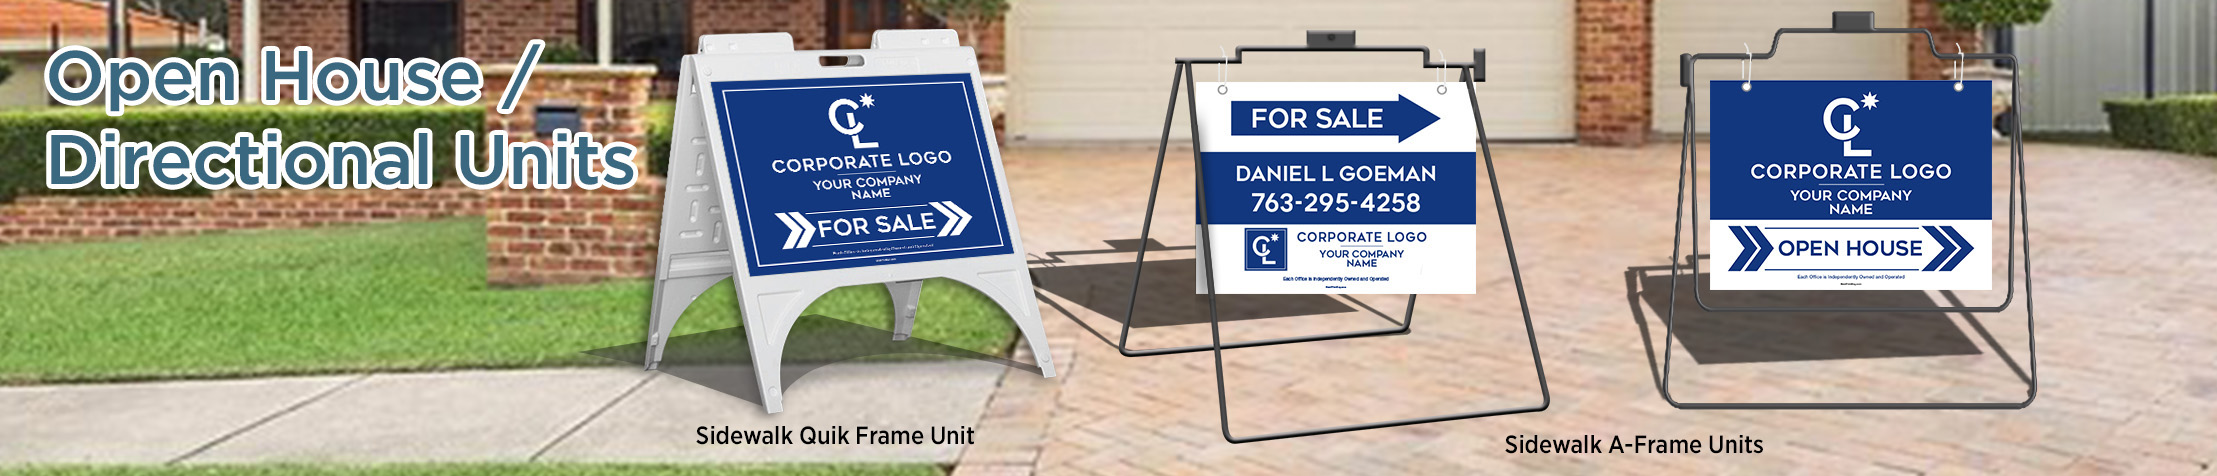 Coldwell Banker Real Estate Open House/Directional Units - real estate Sidewalk A-Frame signs | BestPrintBuy.com